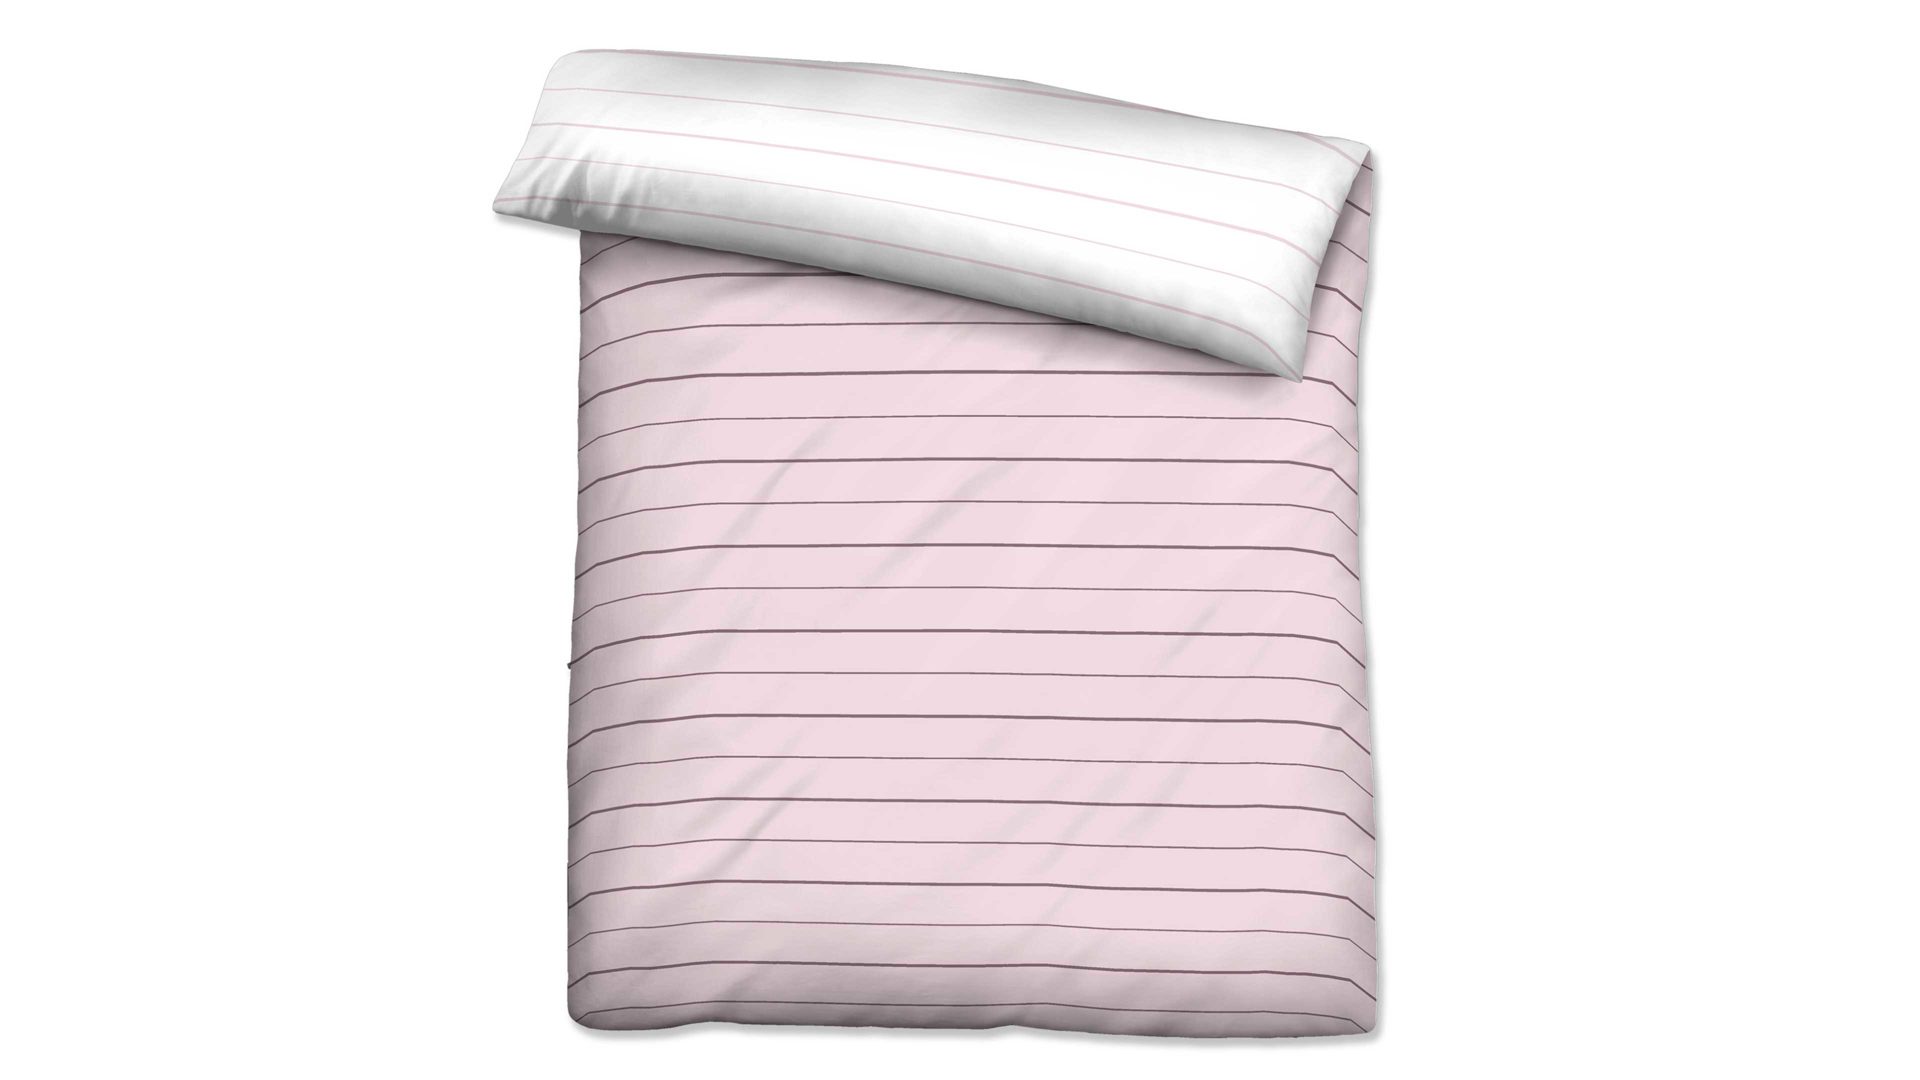 Bettbezug Biberna aus Stoff in Pastellfarben biberna Mako-Satin Bettdeckenbezug Streifen Mix & Match rosefarbene & sturmgraue Streifen – ca. 135 x 200 cm